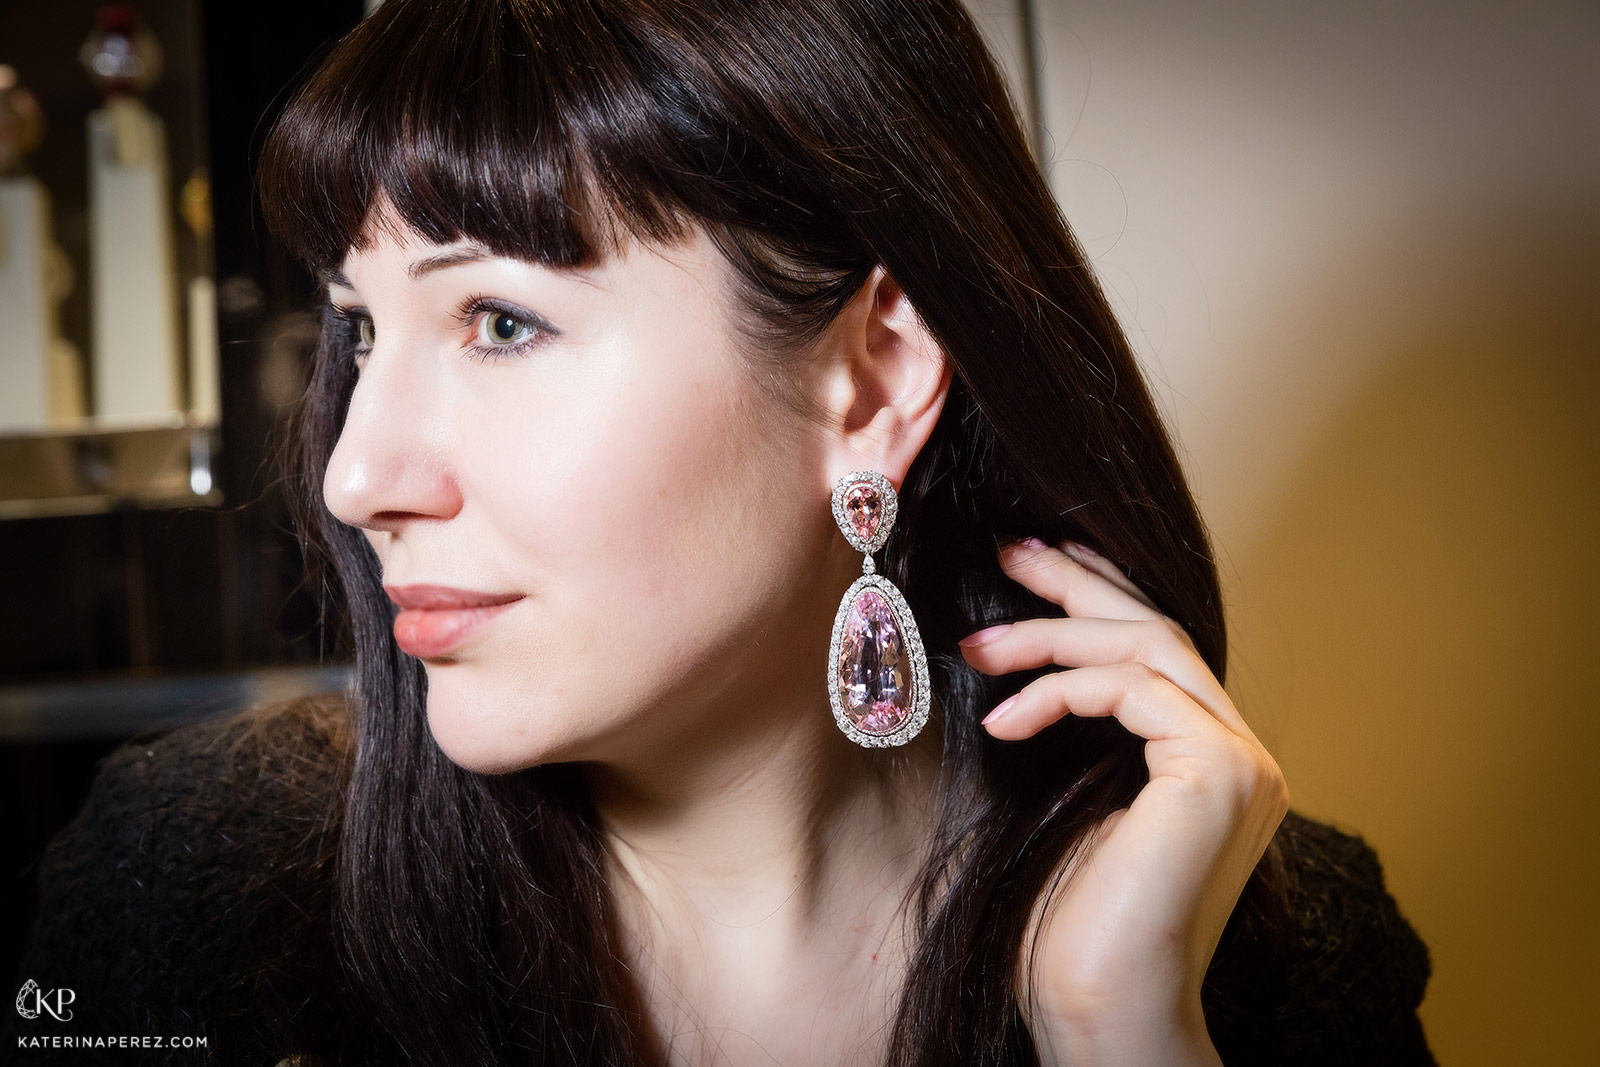 Jacob & Co. earrings with 100ct morganite and diamonds